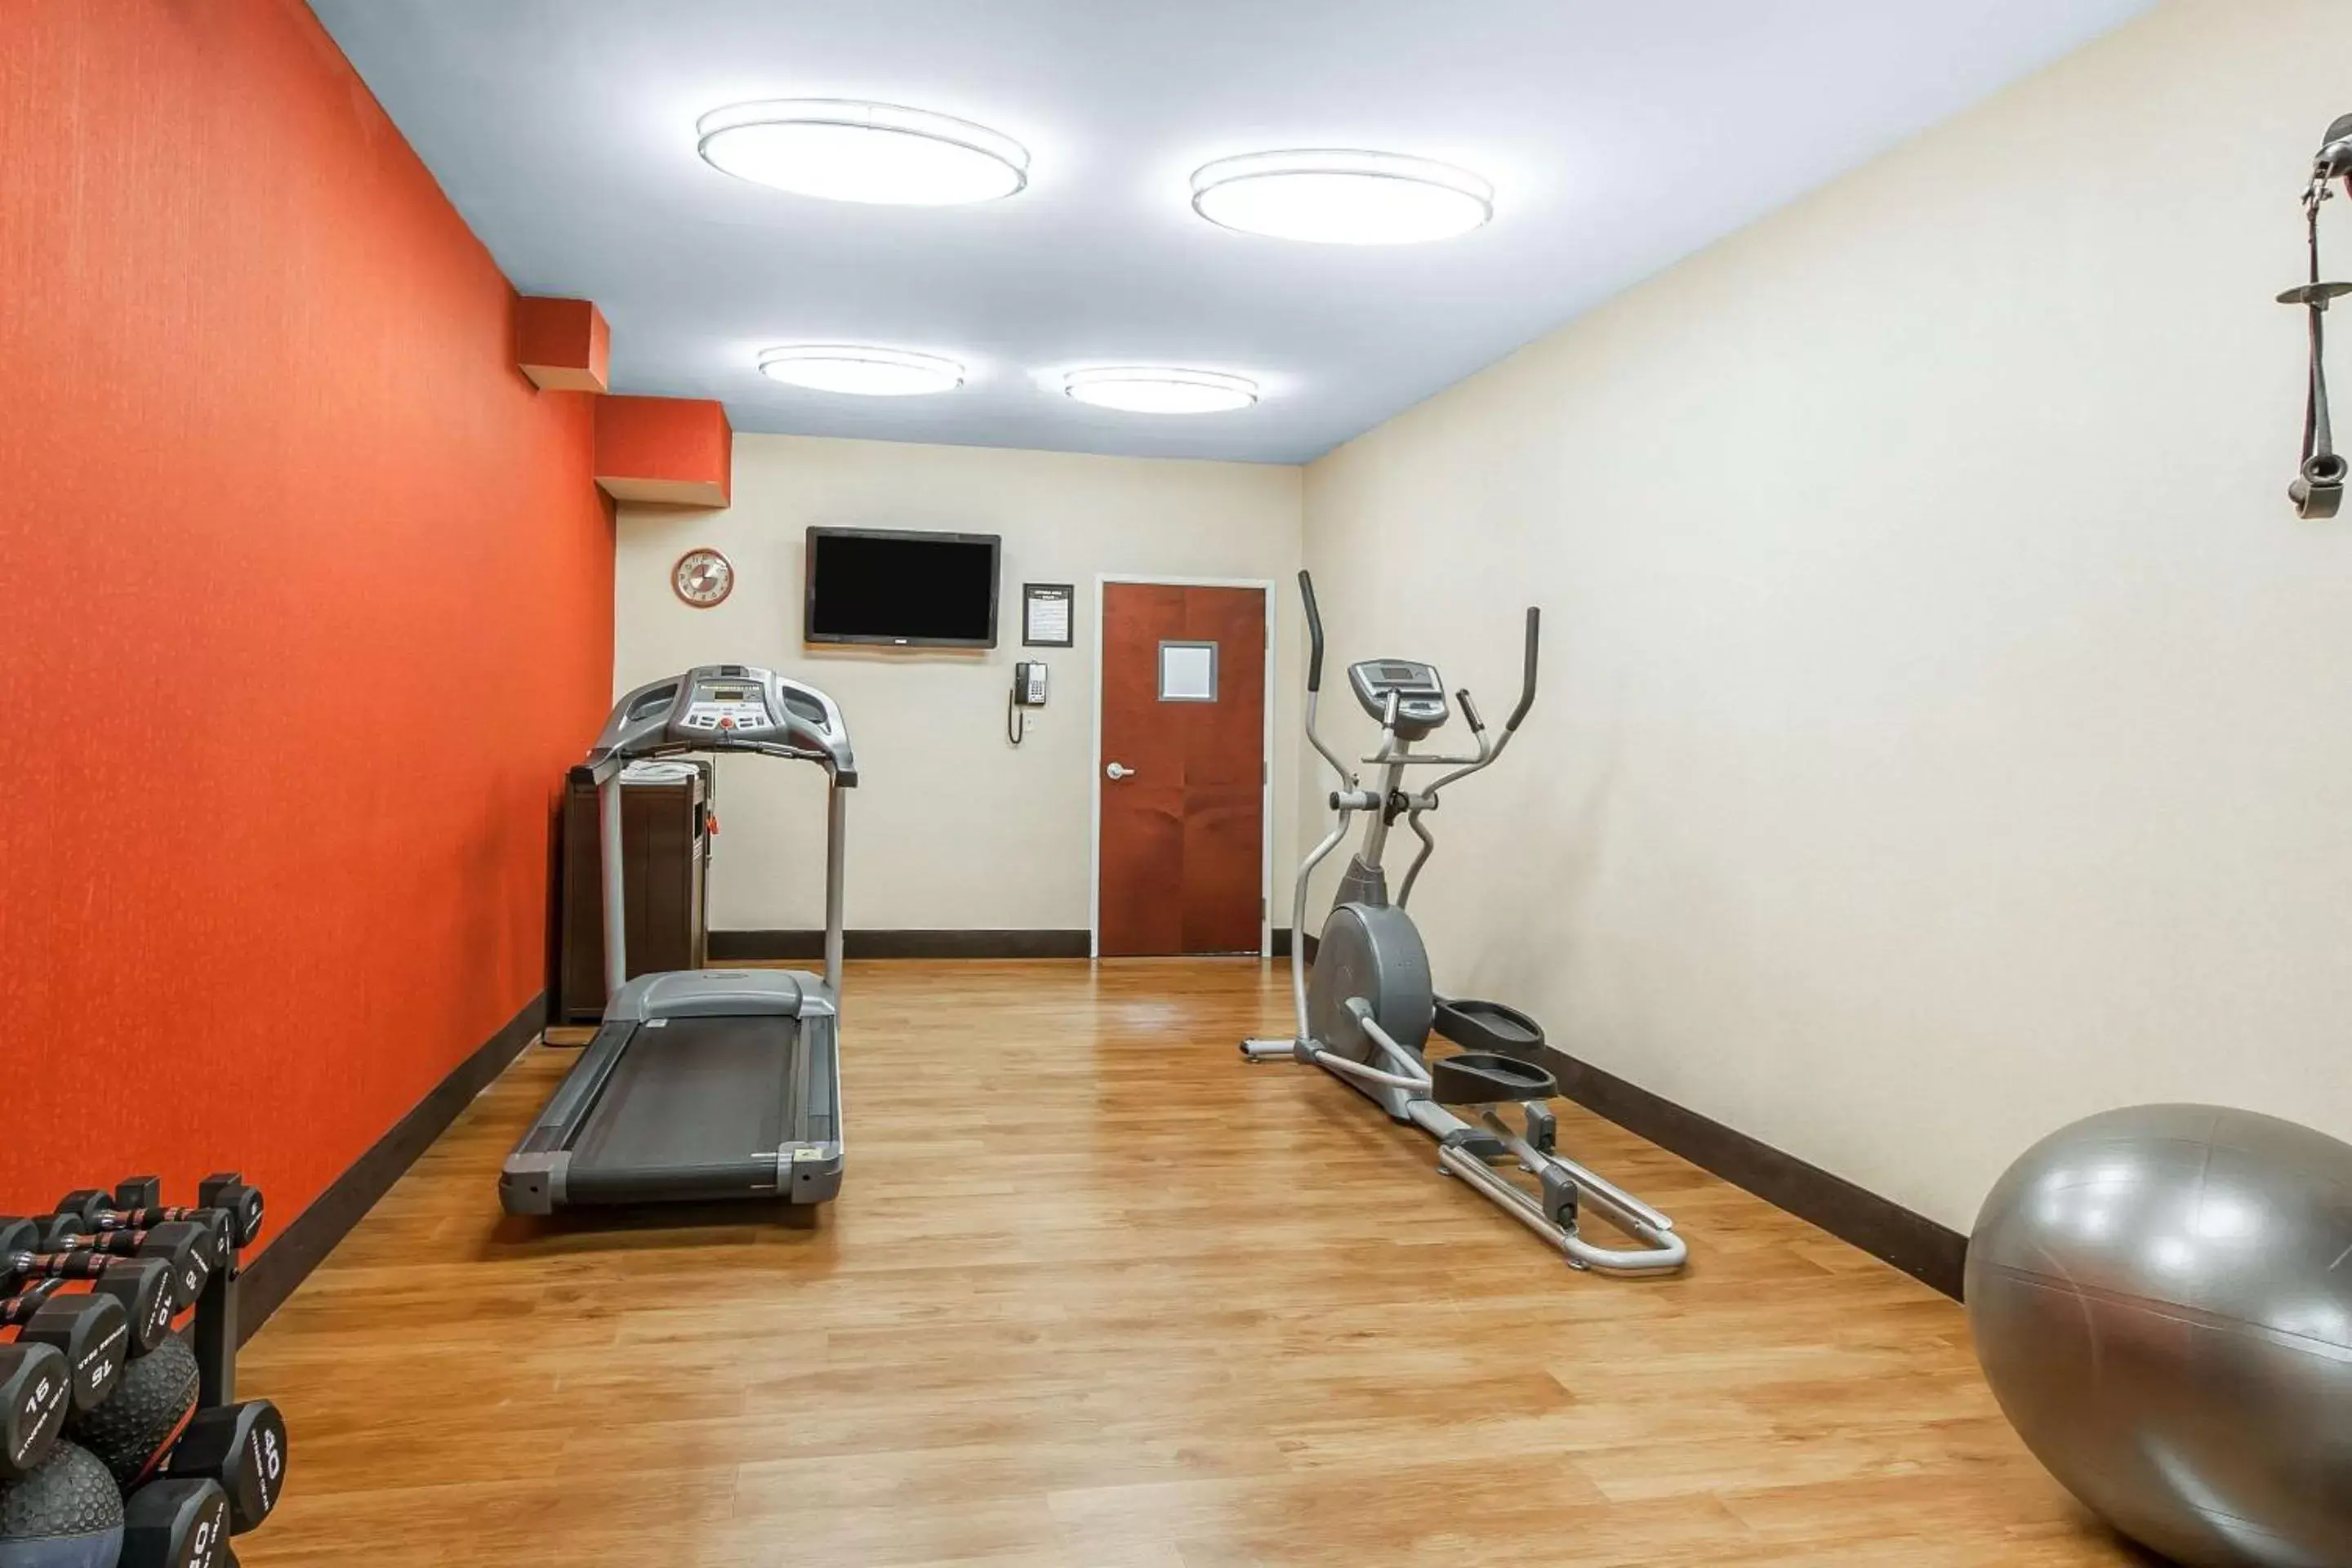 Fitness centre/facilities, Fitness Center/Facilities in Comfort Inn Lexington South